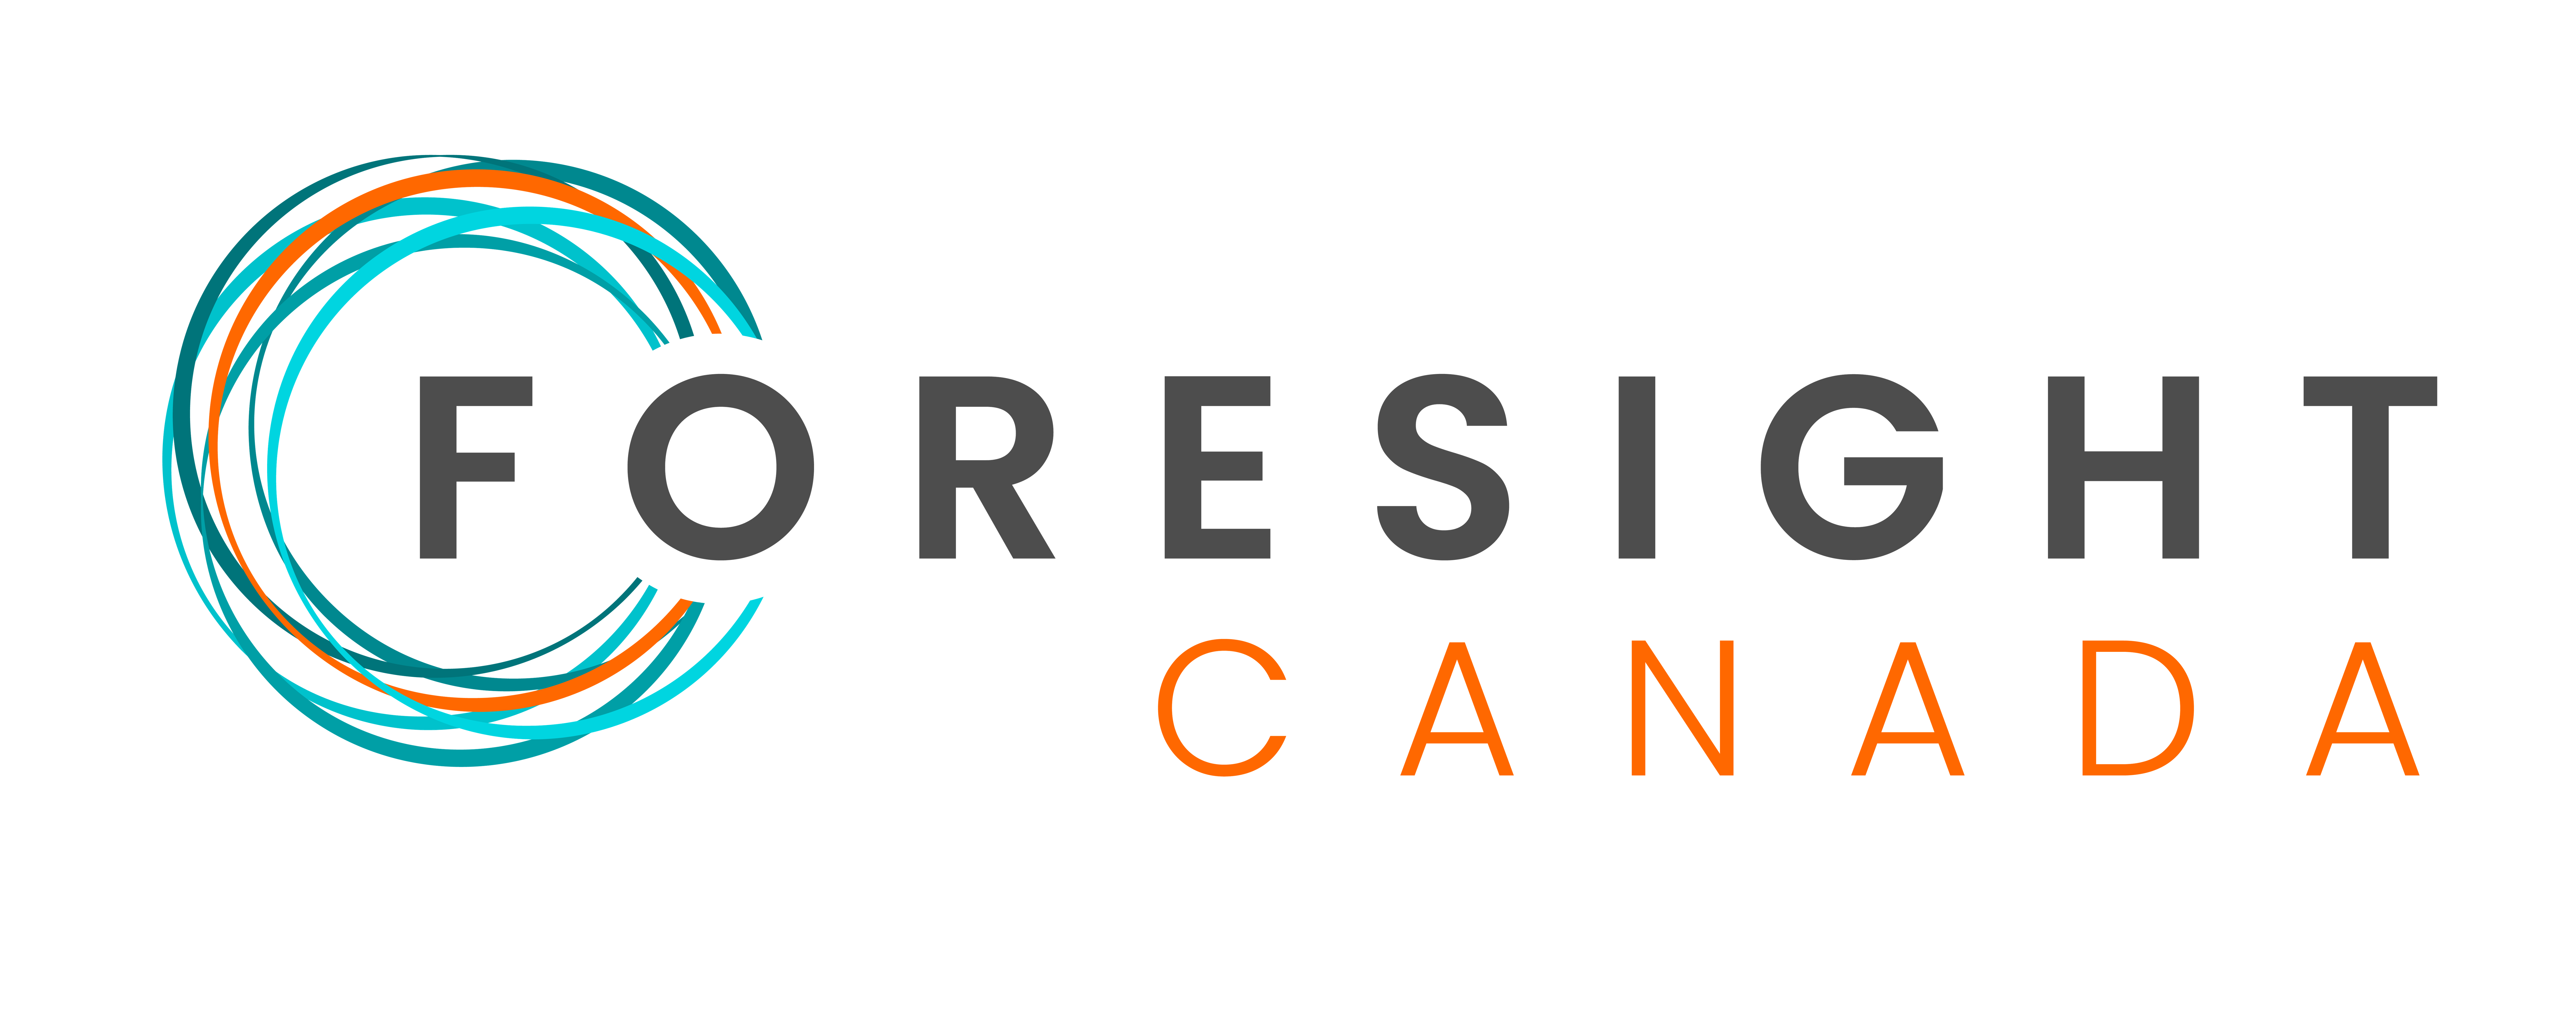 foresight-logo